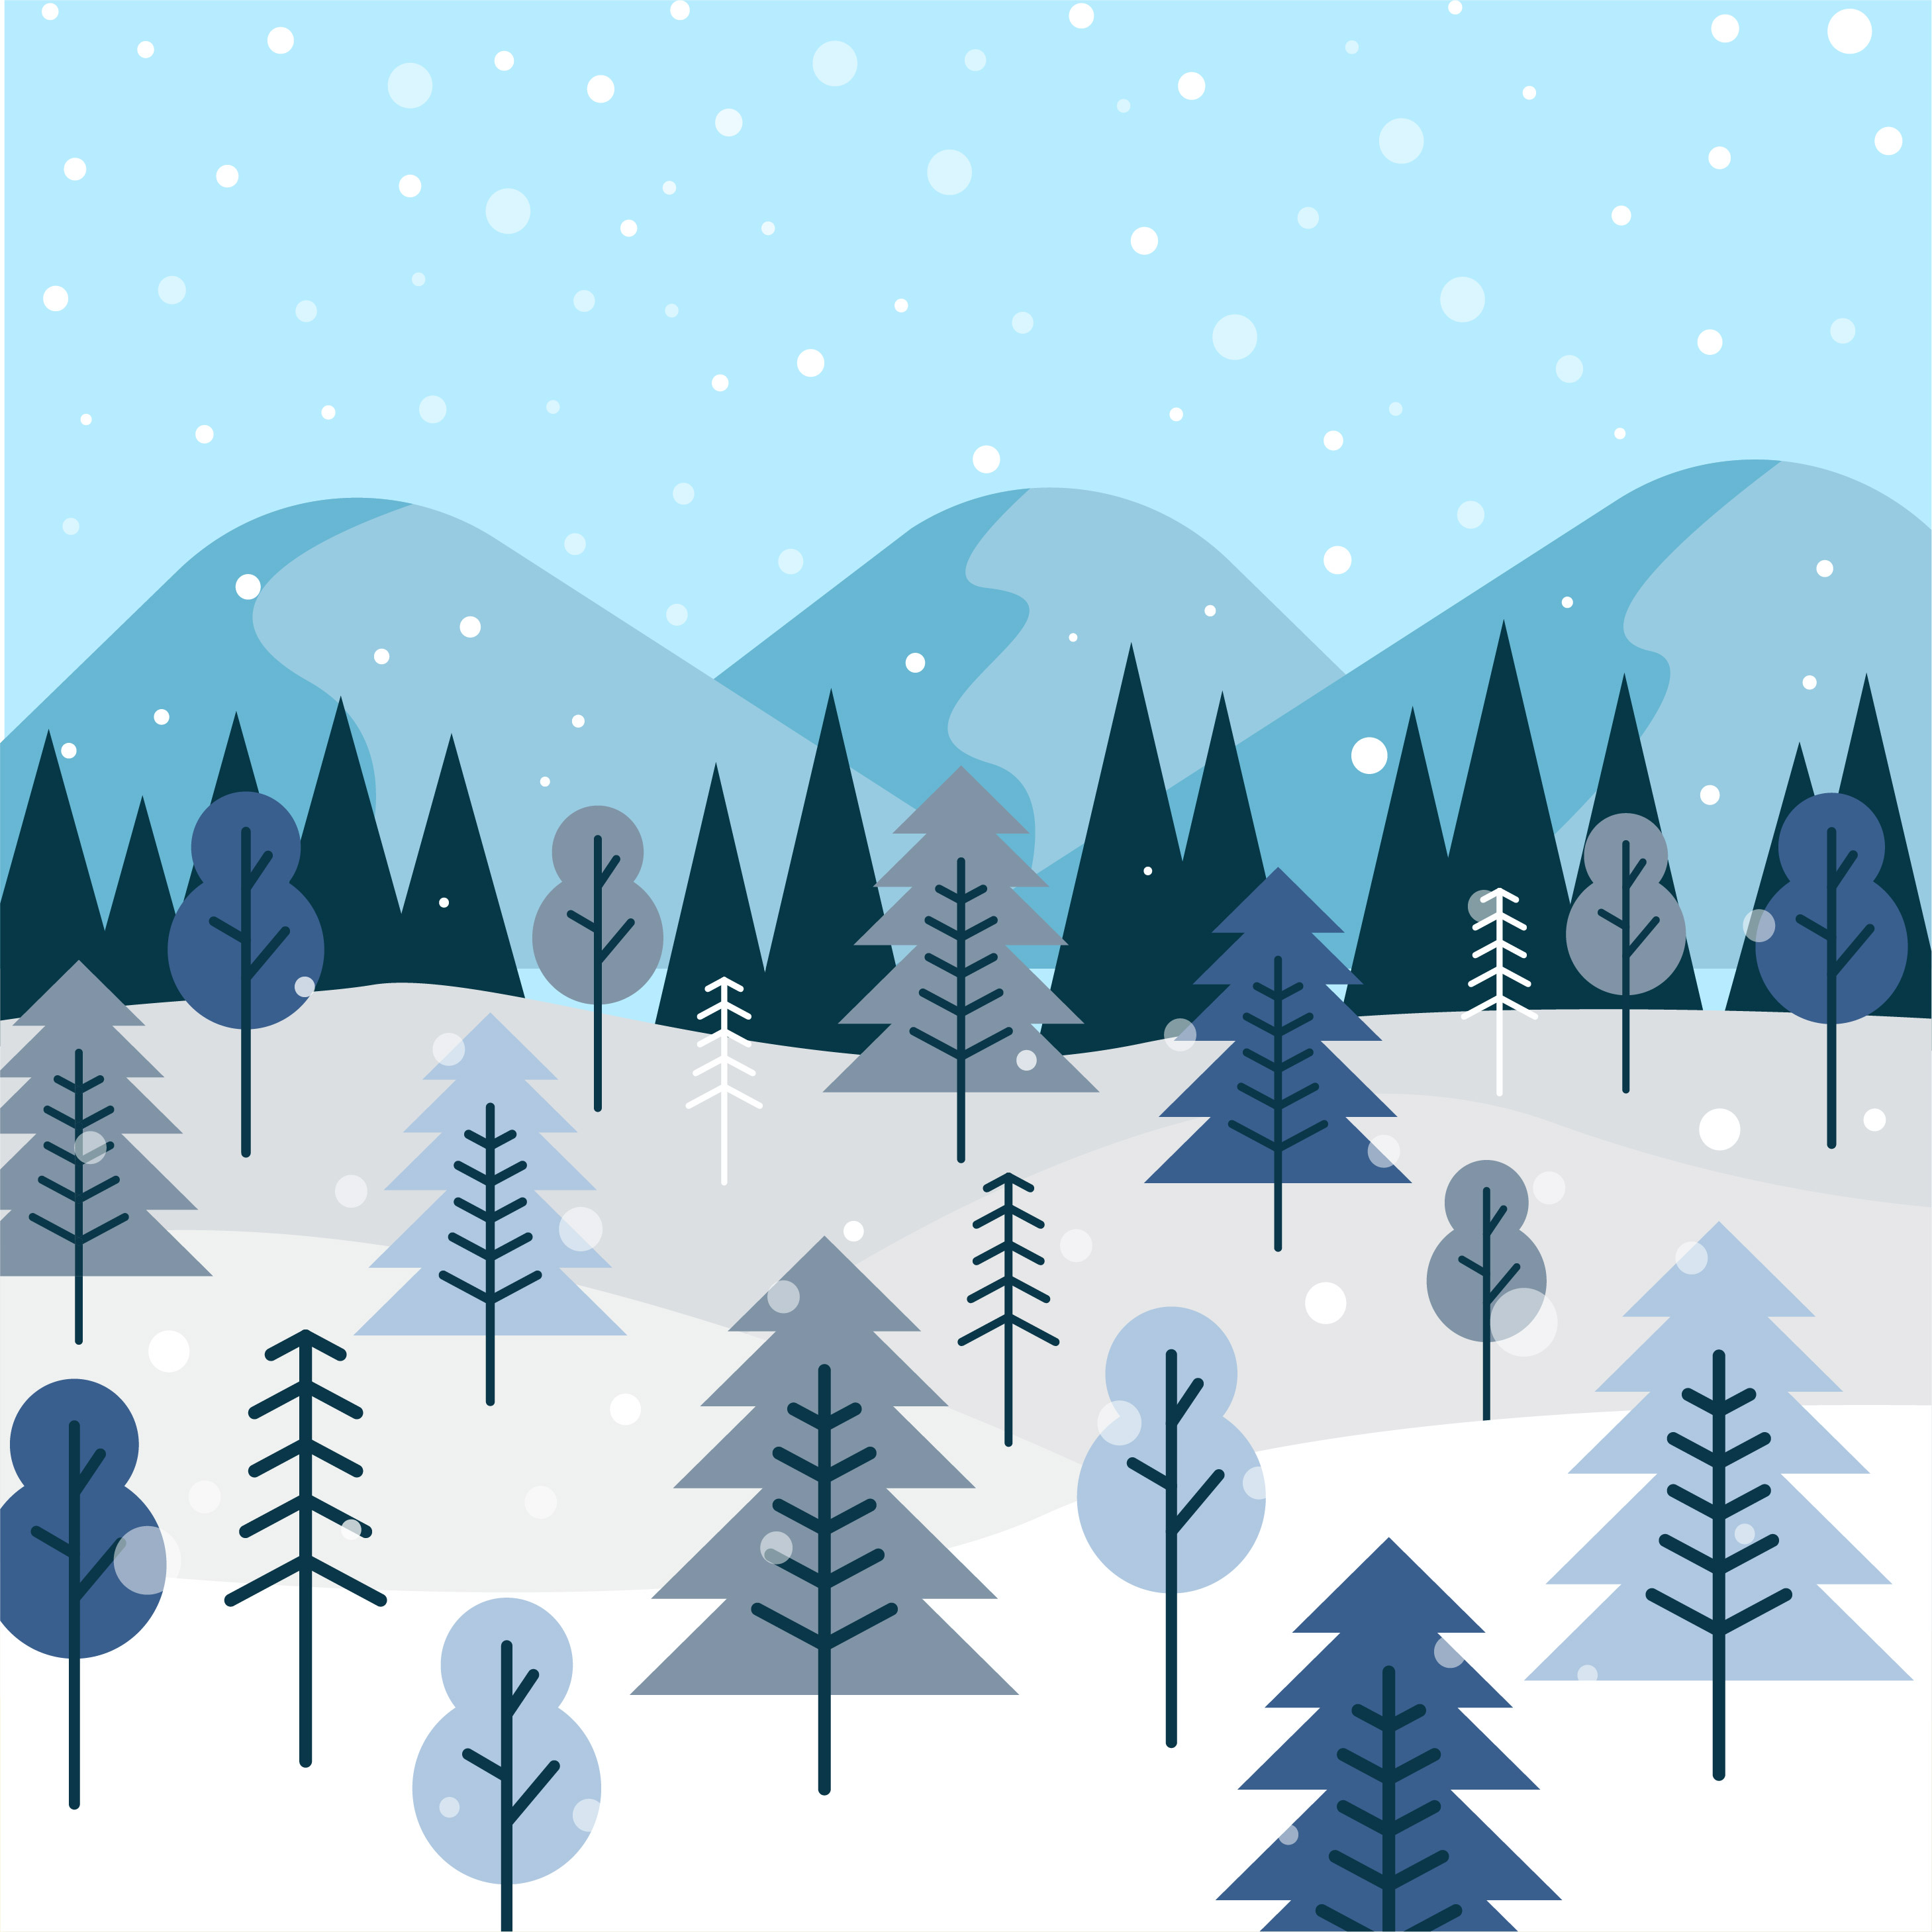 Download Winter Forest Vector - Download Free Vectors, Clipart Graphics & Vector Art